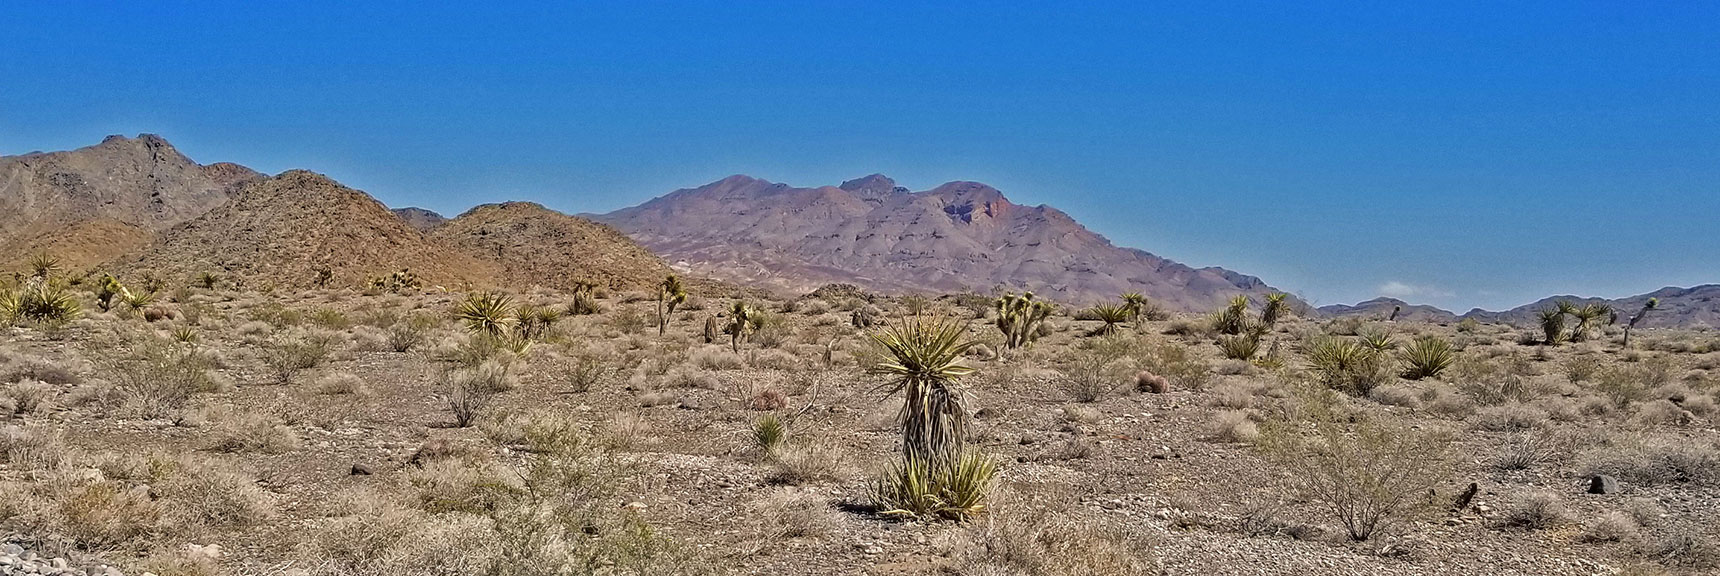 Gass Peak Viewed from Mormon Well Road | Fossil Ridge End to End | Sheep Range | Desert National Wildlife Refuge, Nevada